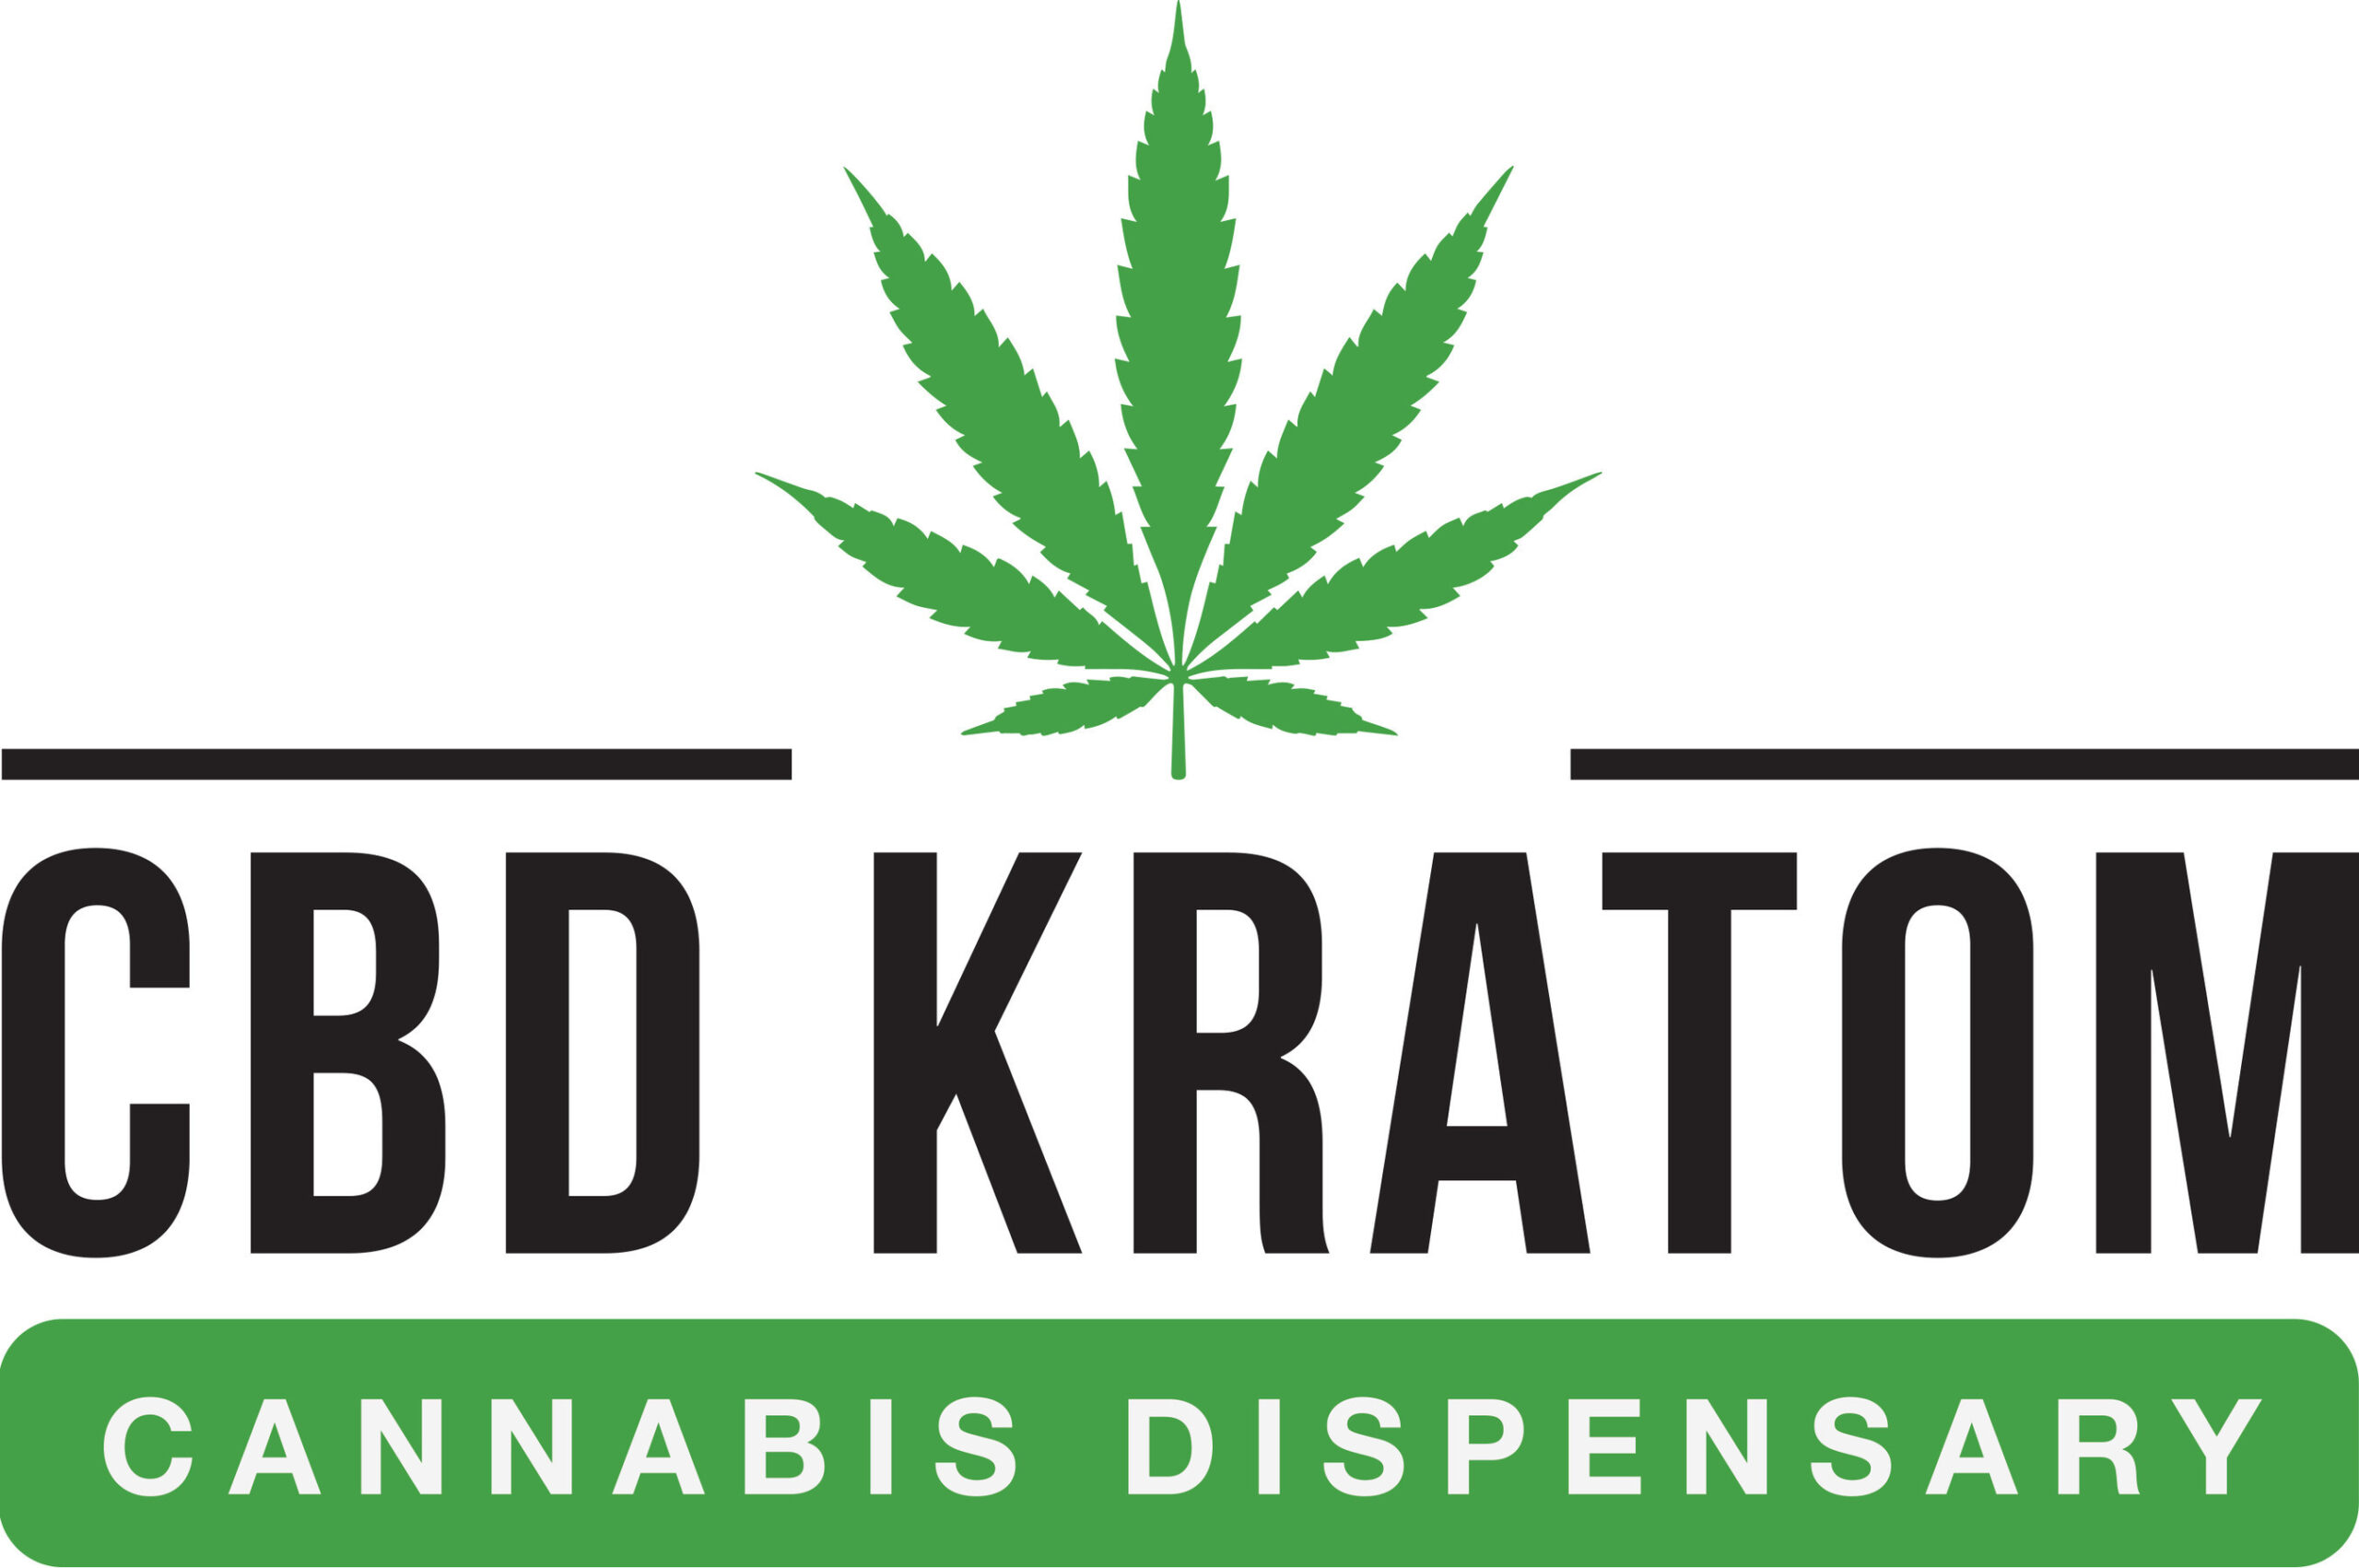 CBD Kratom Cannabis Dispensary Logo With Black Text on White Background And Green Marijuana Leaf